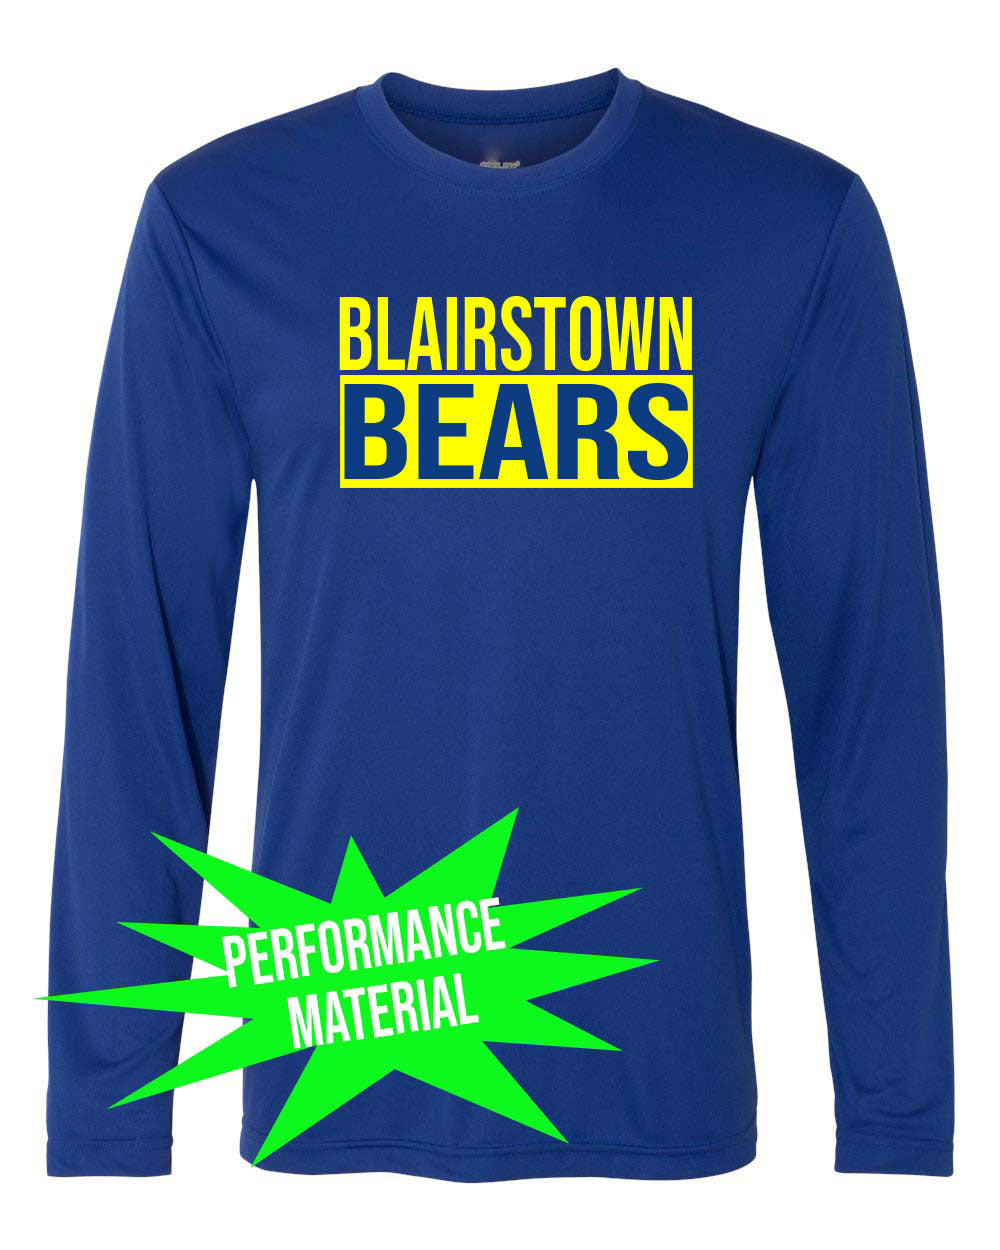 Blairstown Bears Performance Material Design 12 Long Sleeve Shirt